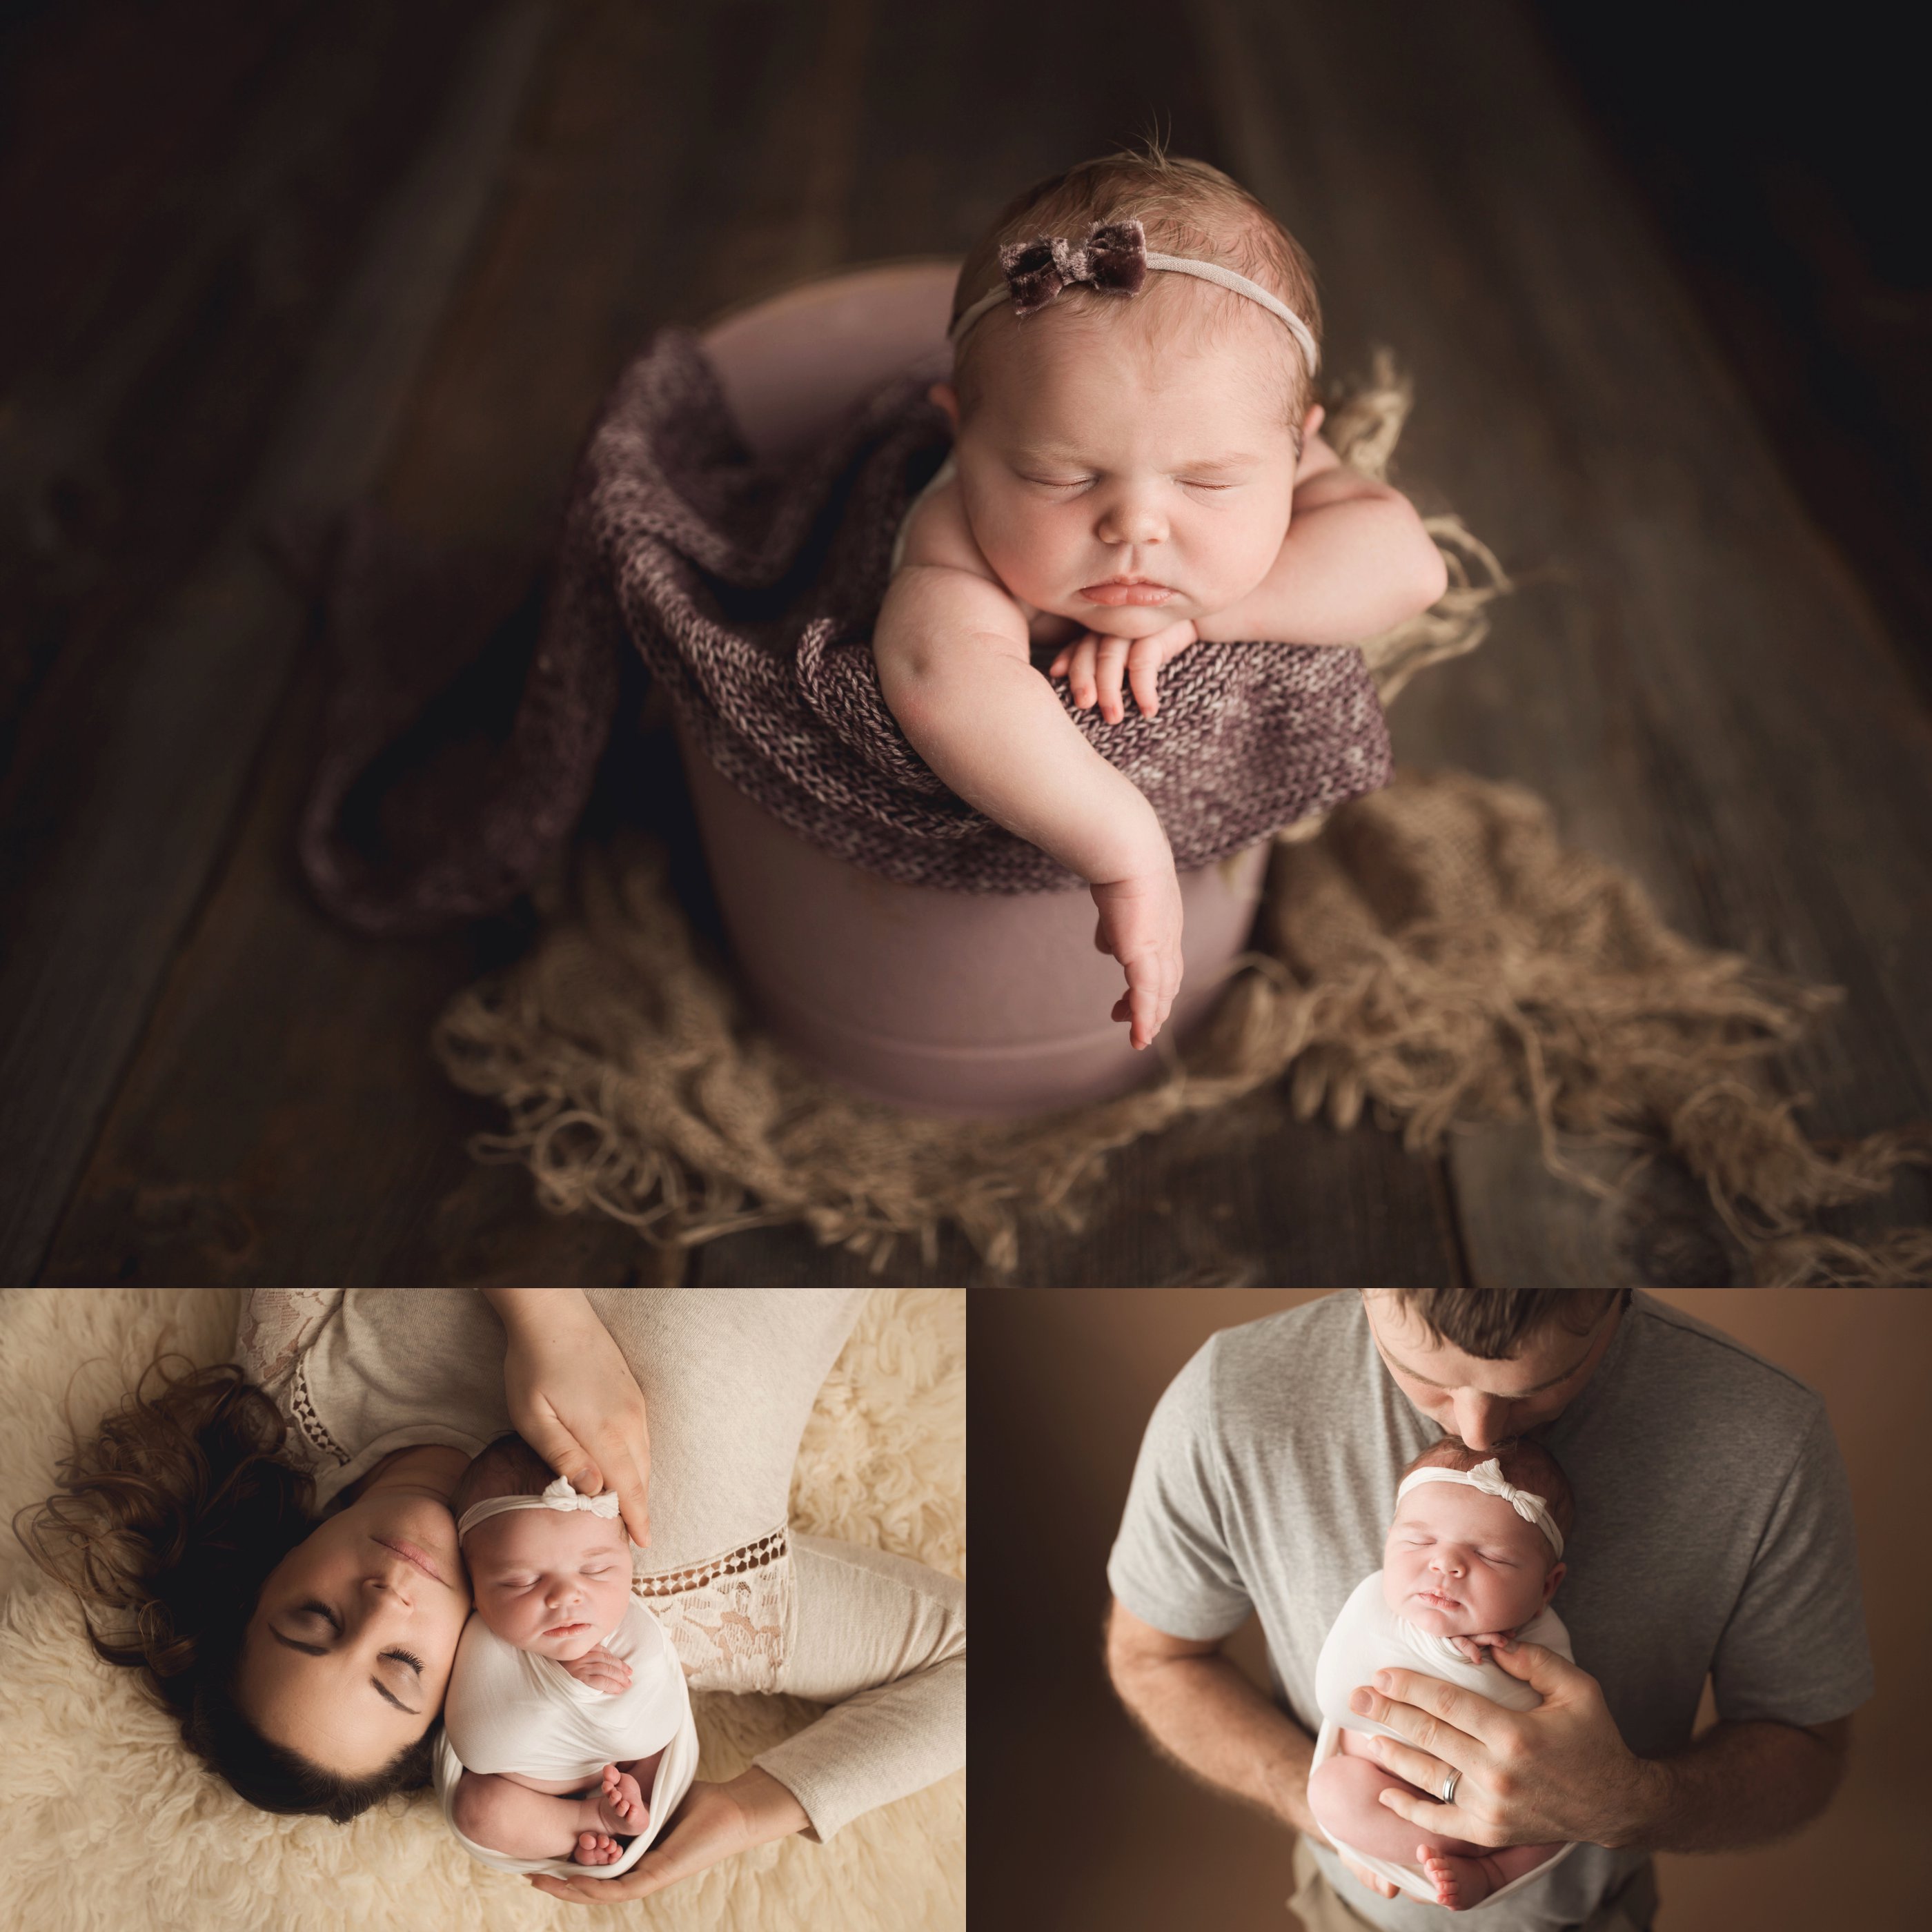 Jacquelyn's newborn session